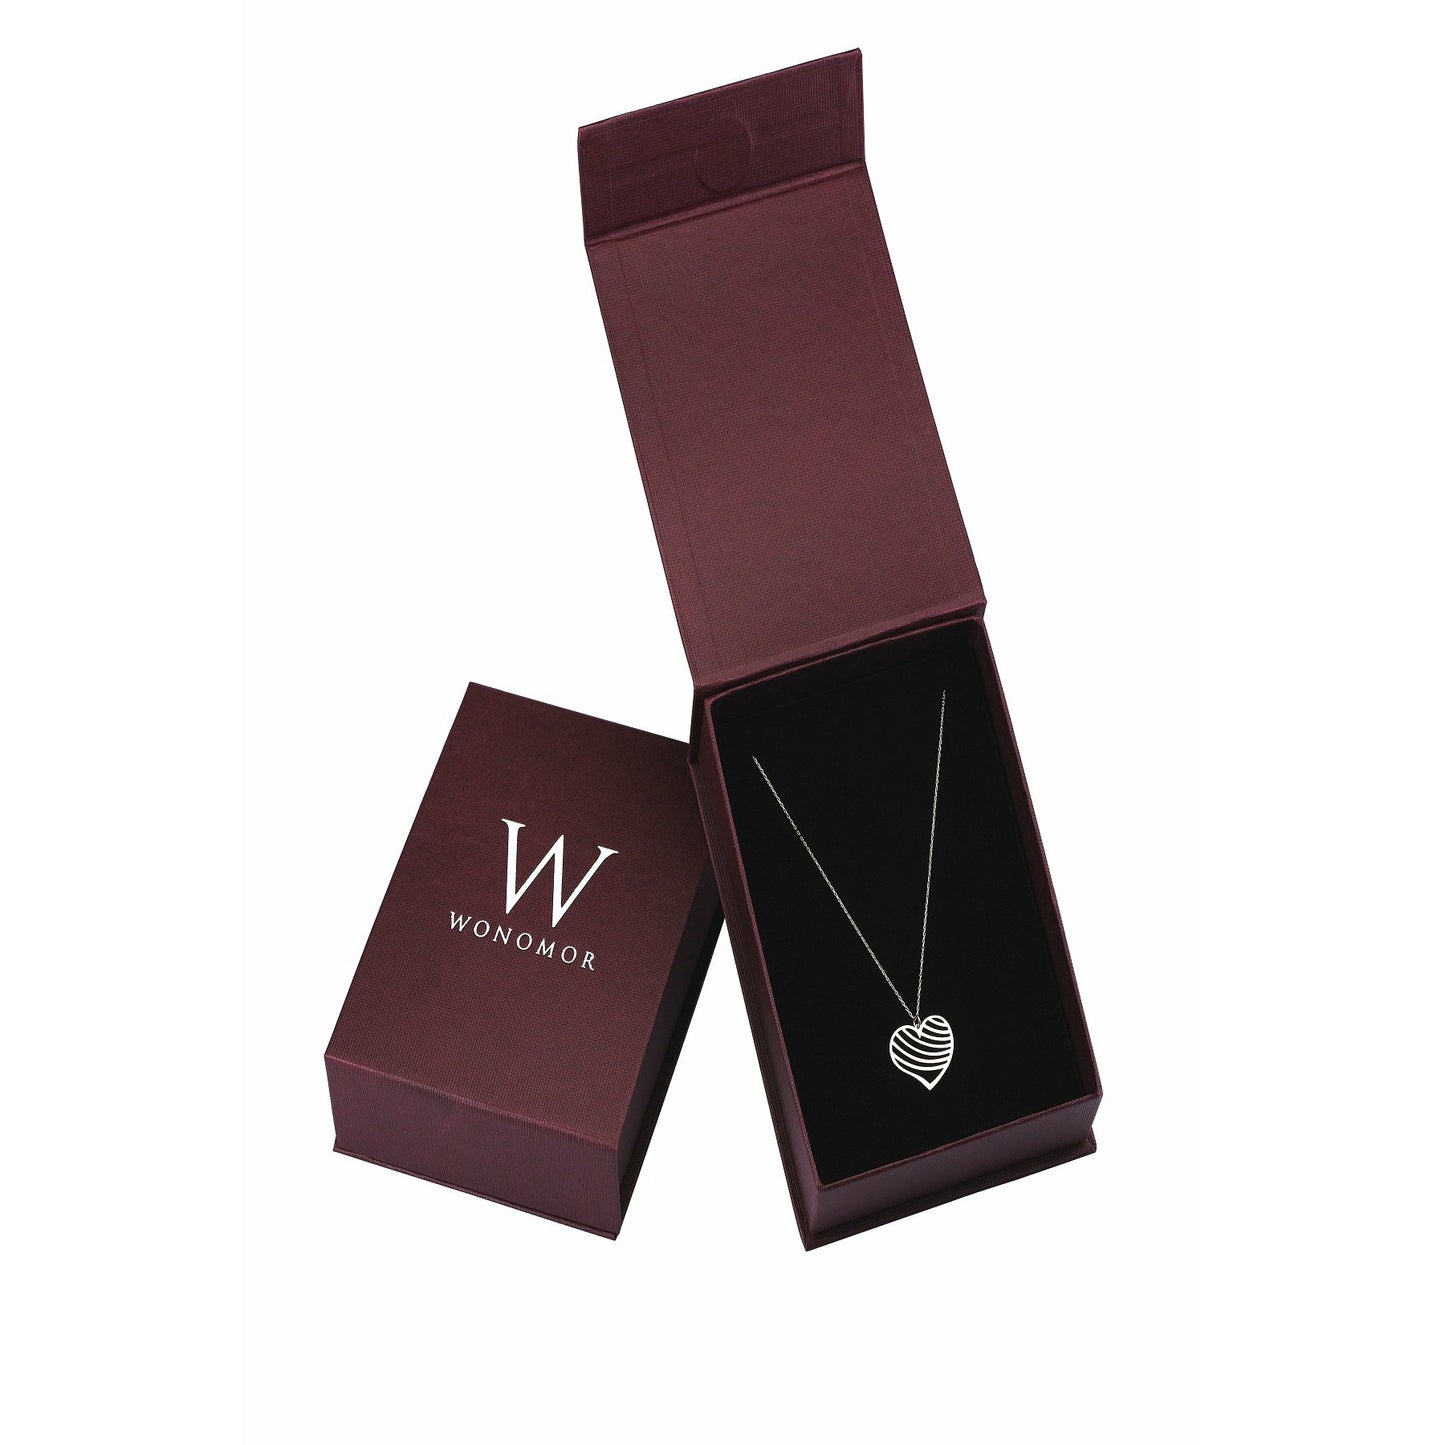 Special Design Gift 14k Gold Elephant Necklace